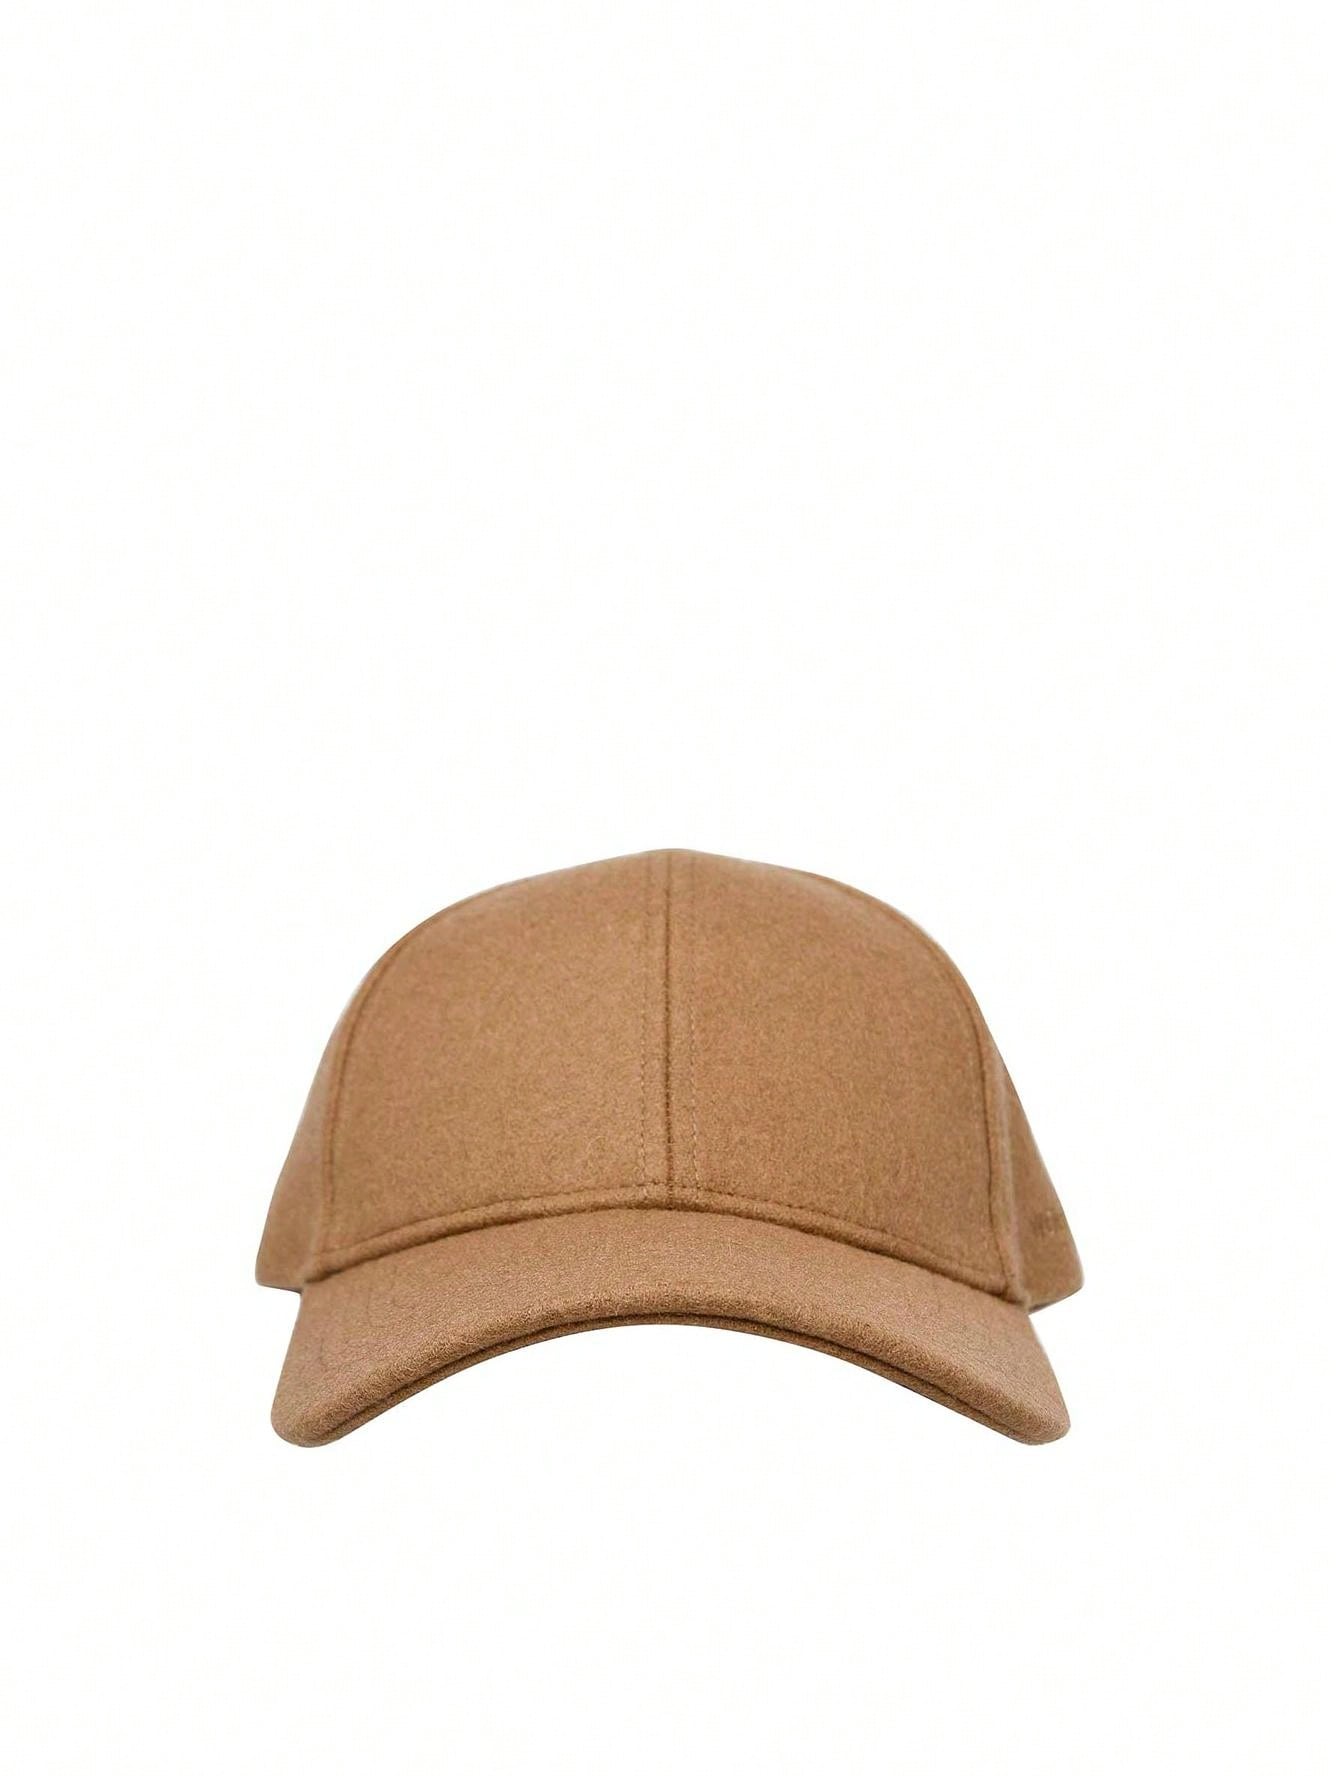 Мужские шапки Woolrich КОРИЧНЕВЫЕ CFWOAC0230MRUT3536734, коричневый woolrich